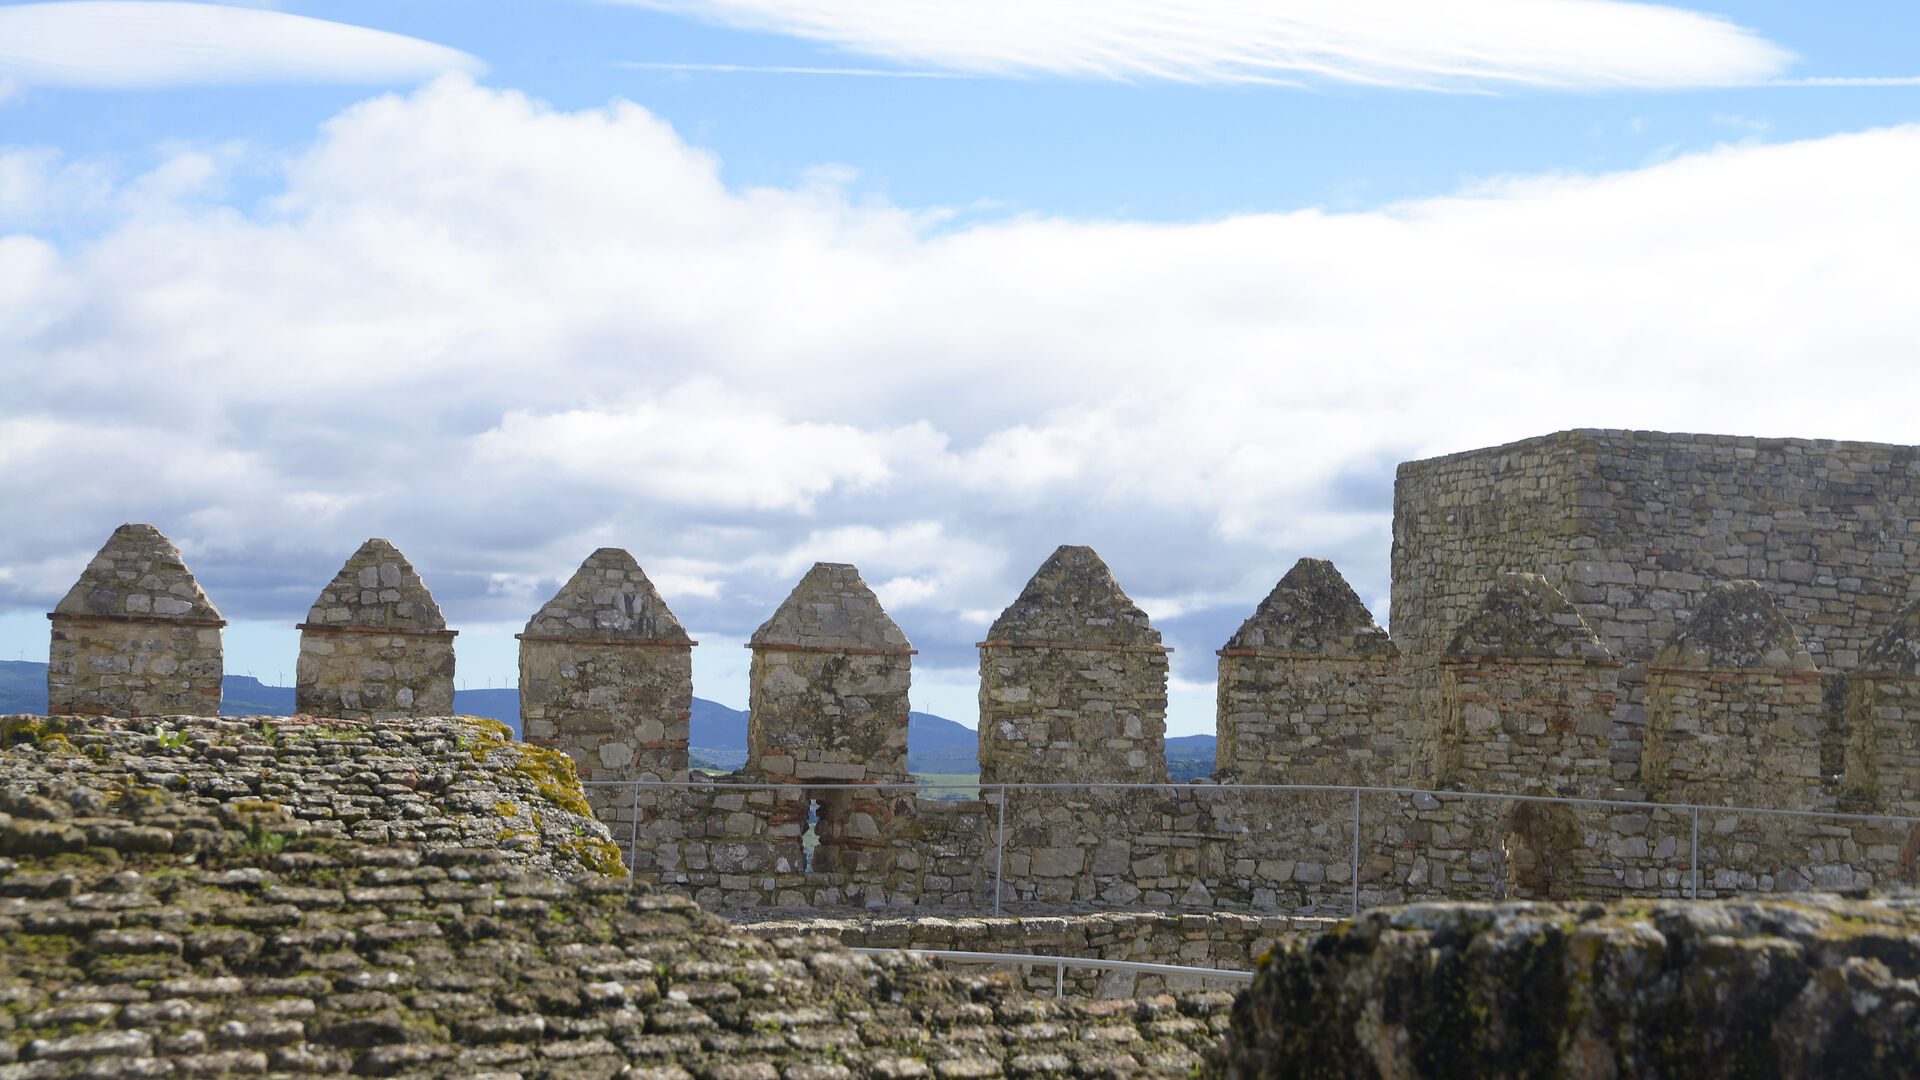 Fotos del castillo de Jimena de la frontera